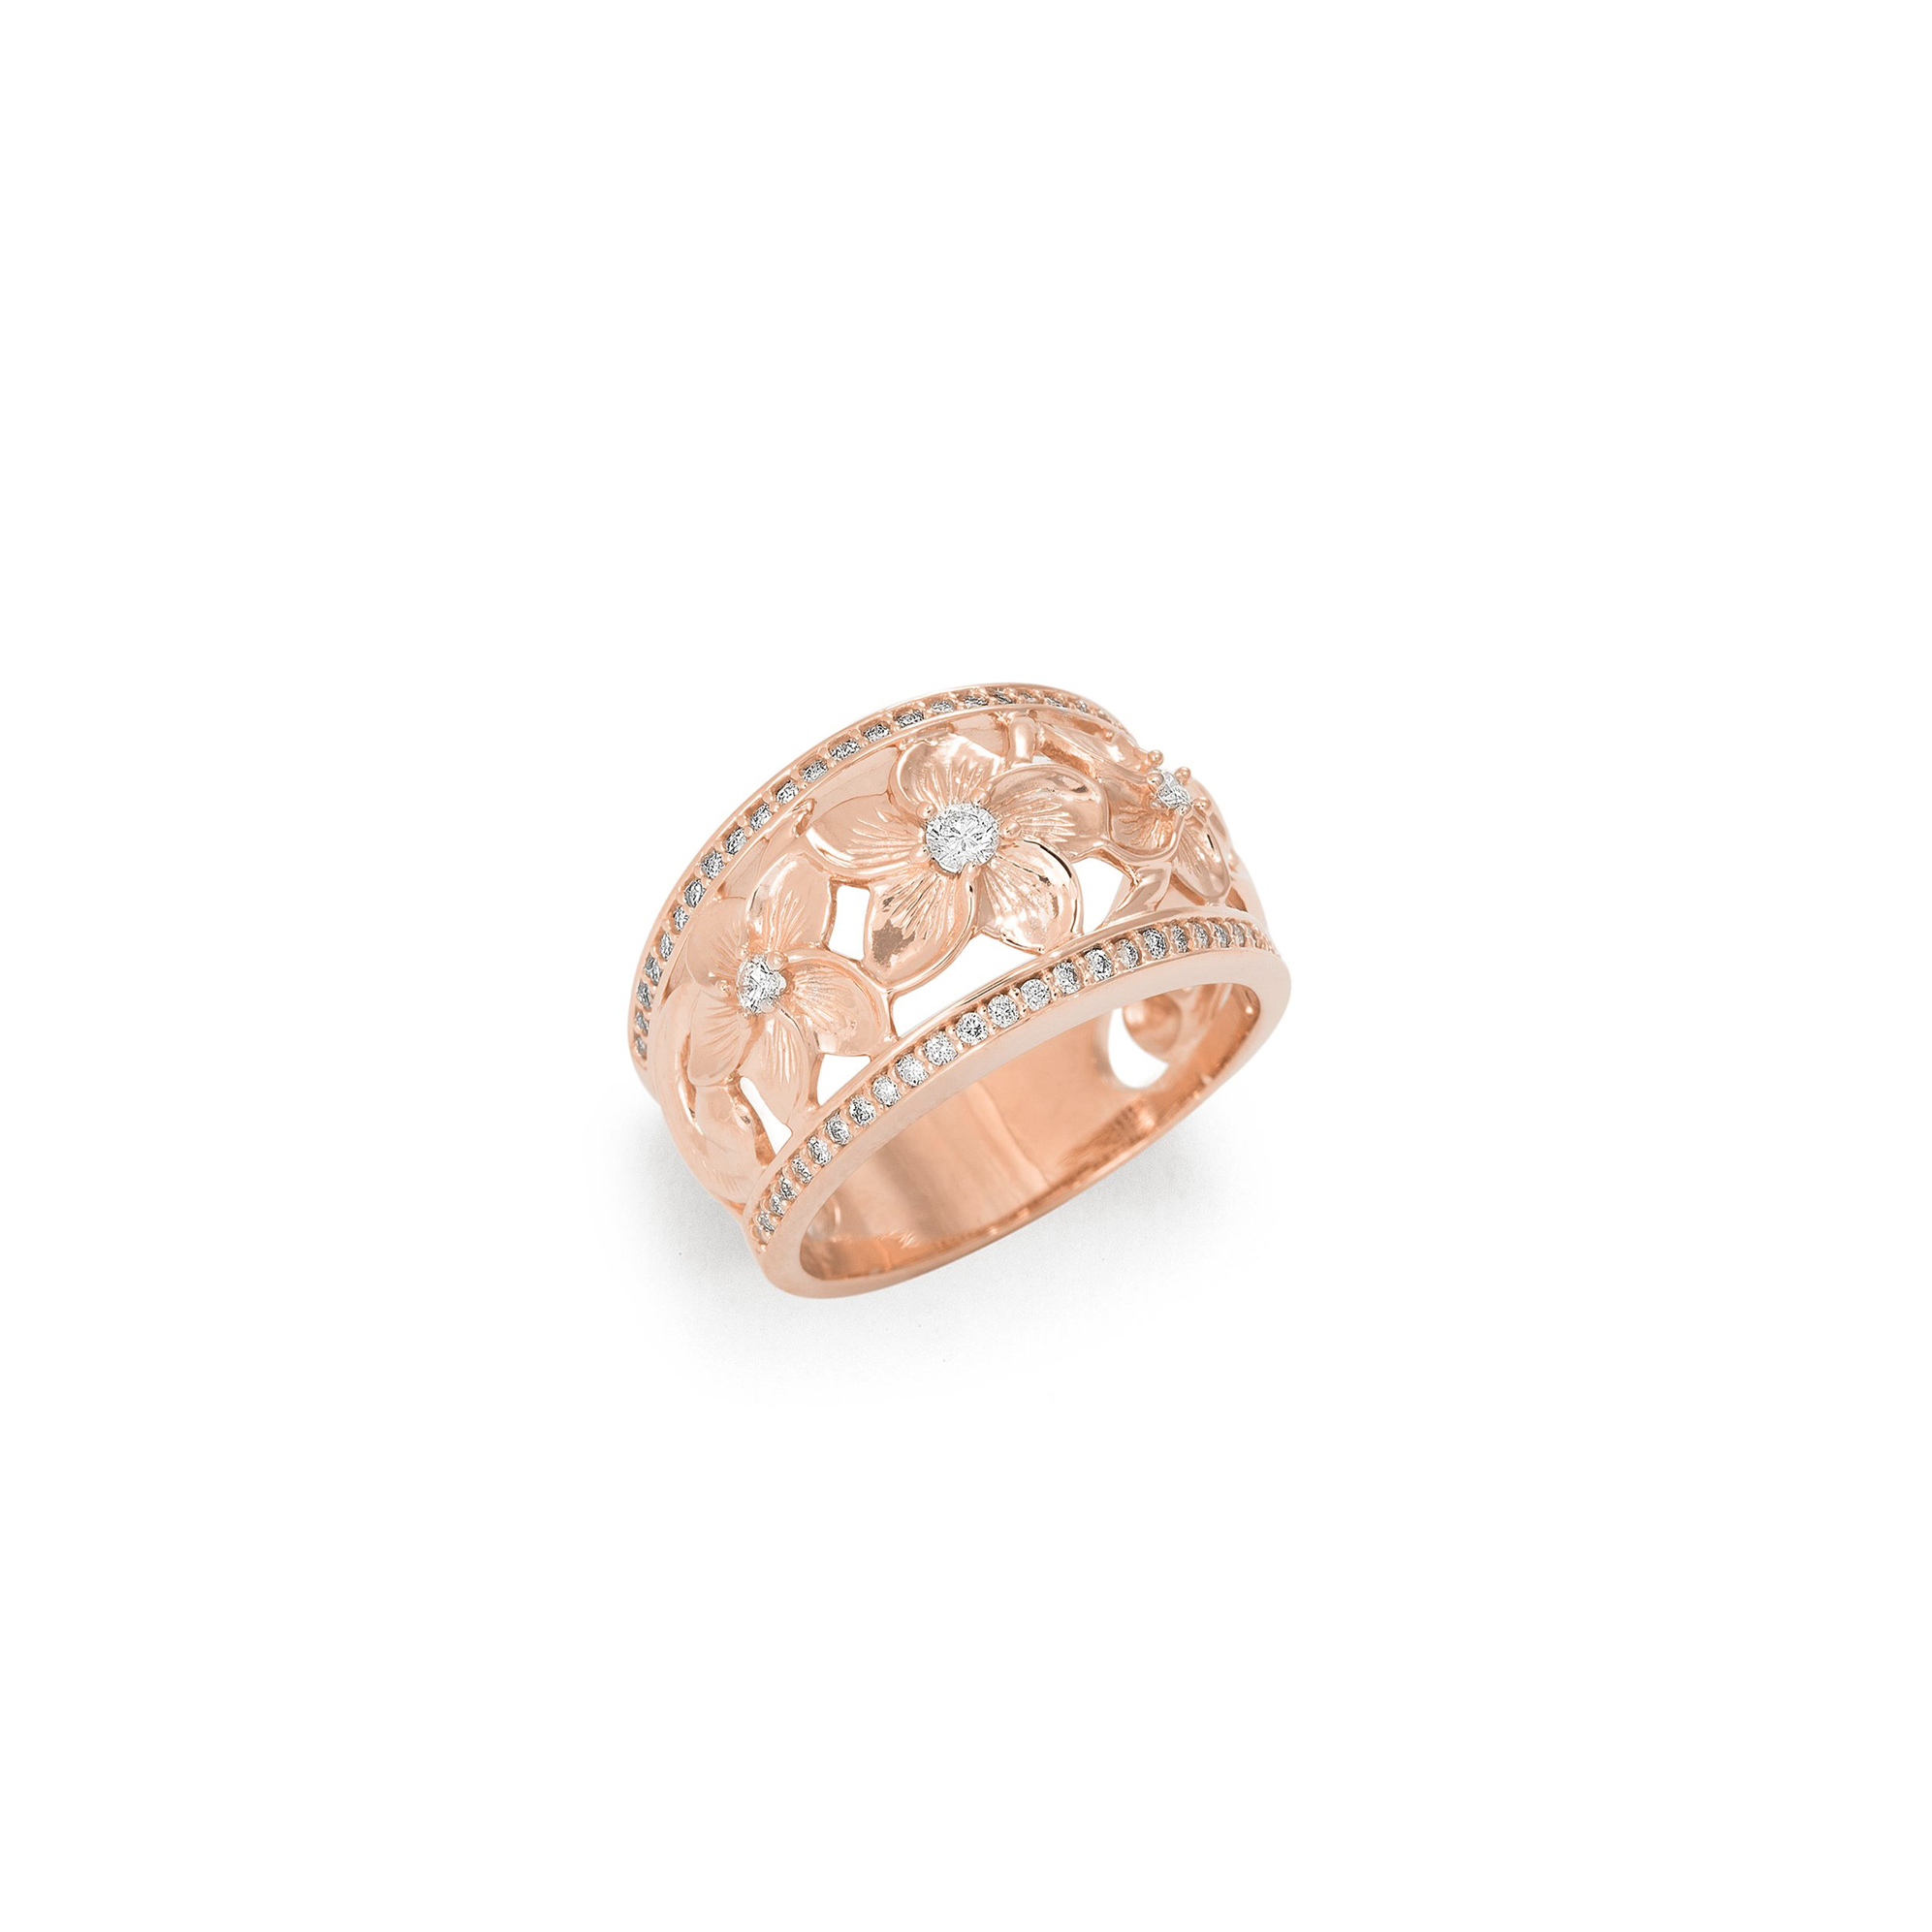 Hawaiian Heirloom Plumeria Ring in Rose Gold with Diamonds -13mm